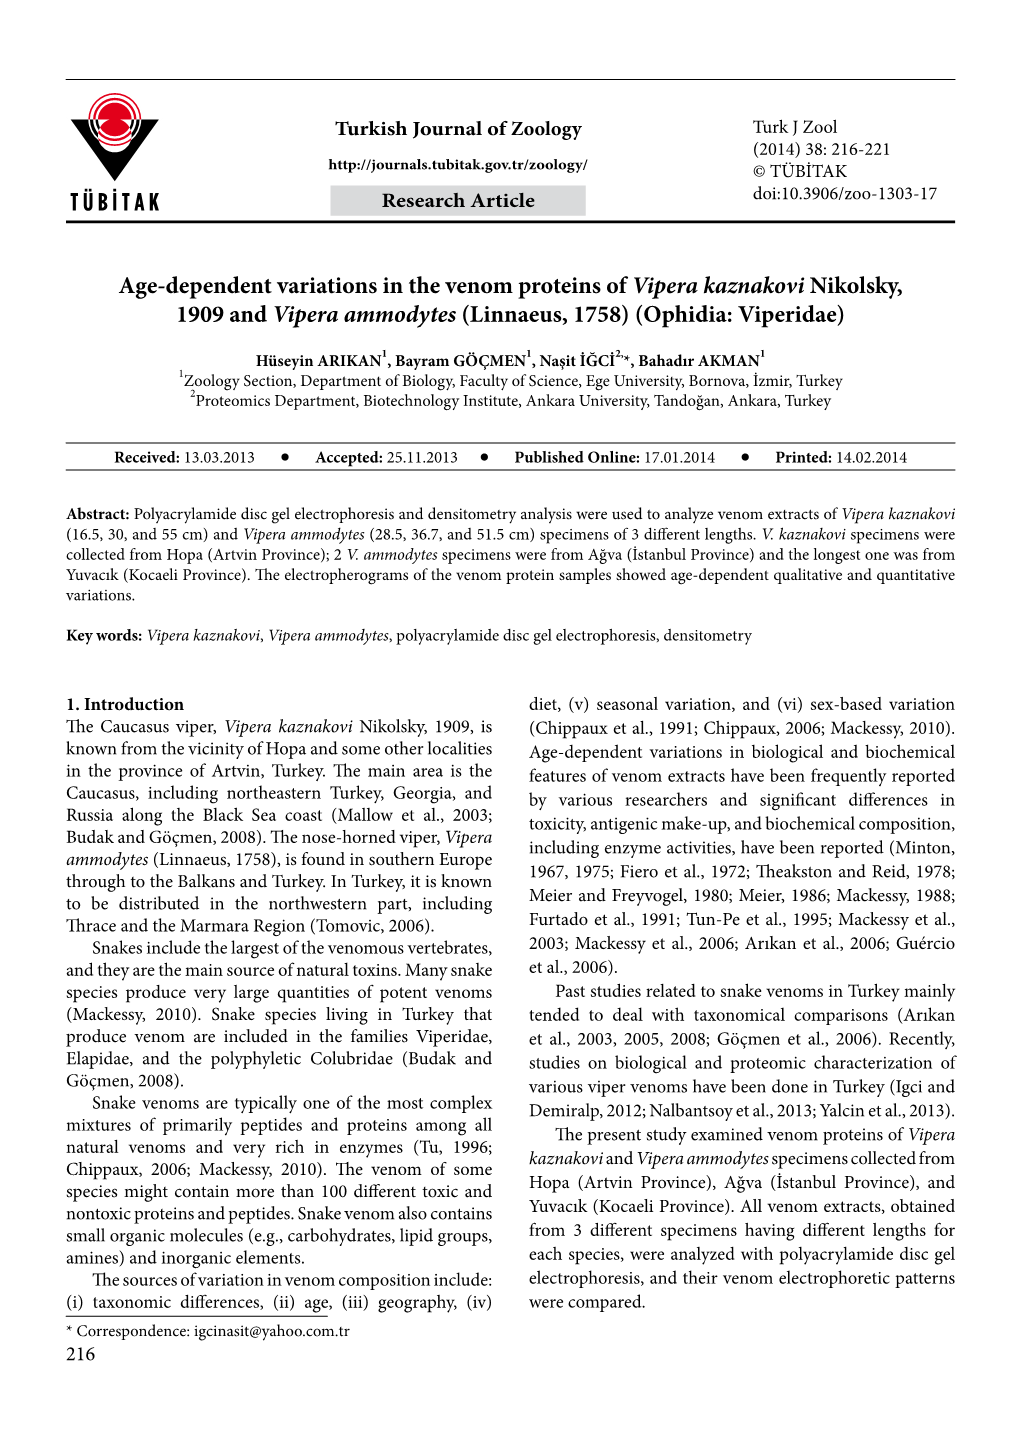 Age-Dependent Variations in the Venom Proteins of Vipera Kaznakovi Nikolsky, 1909 and Vipera Ammodytes (Linnaeus, 1758) (Ophidia: Viperidae)